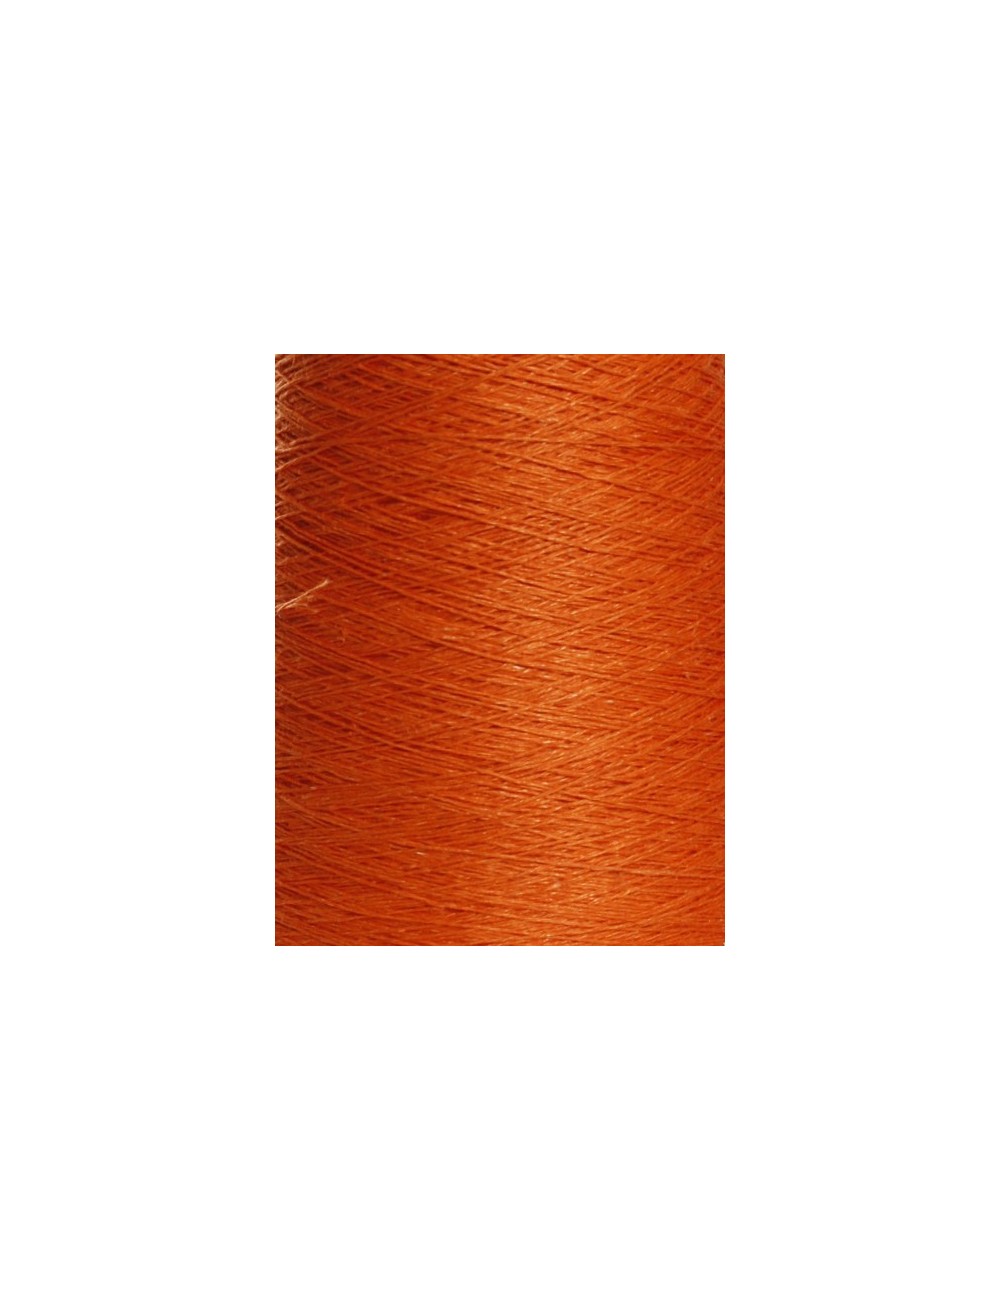 Hørgarn 8(1) klassisk orange farve